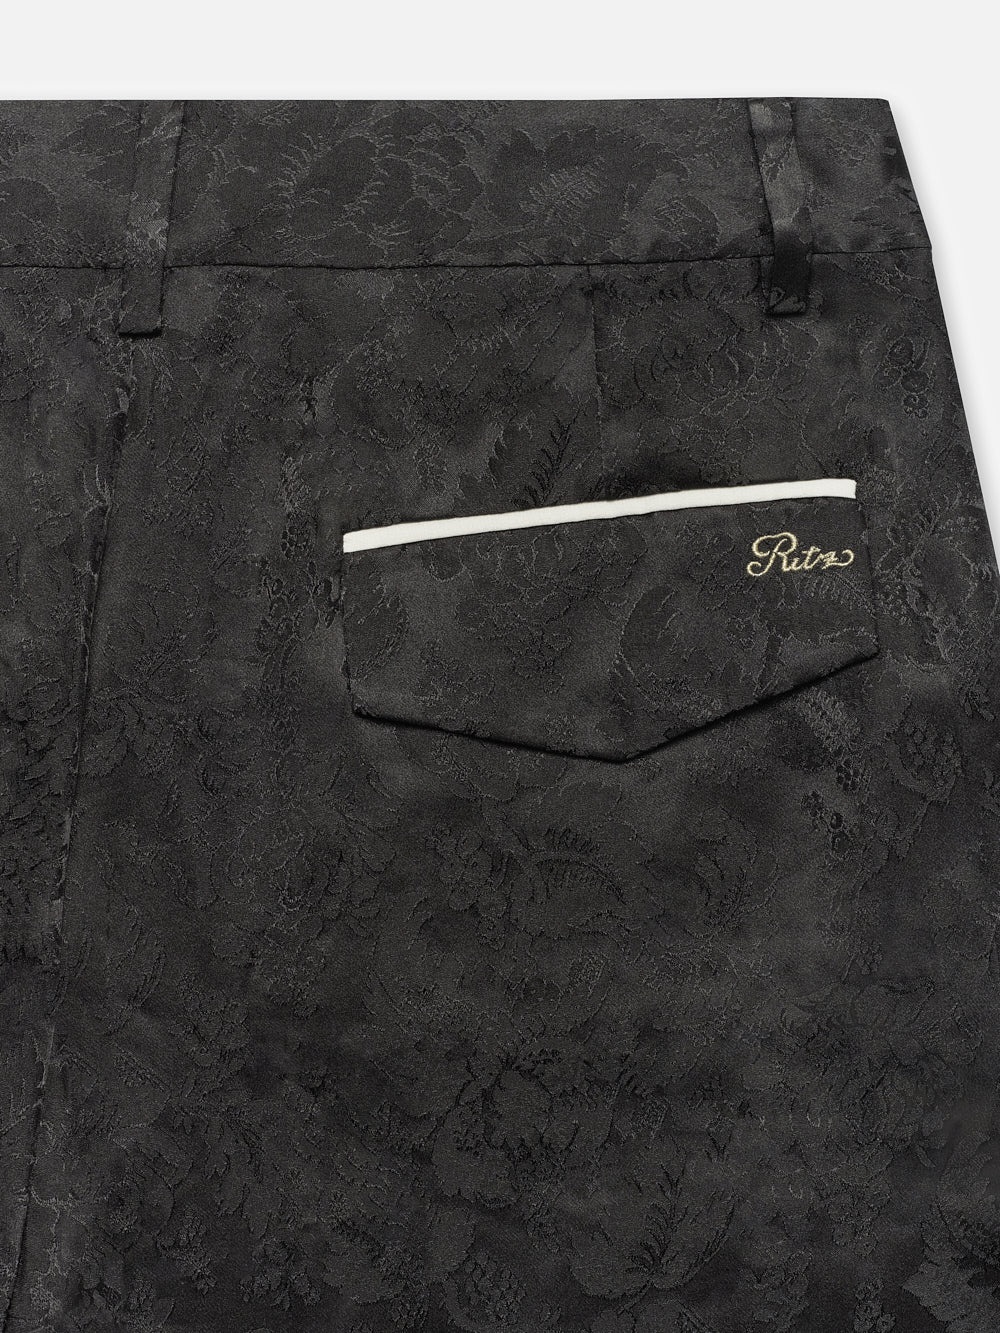 Ritz Women's Pajama Trouser in Black Multi - 3